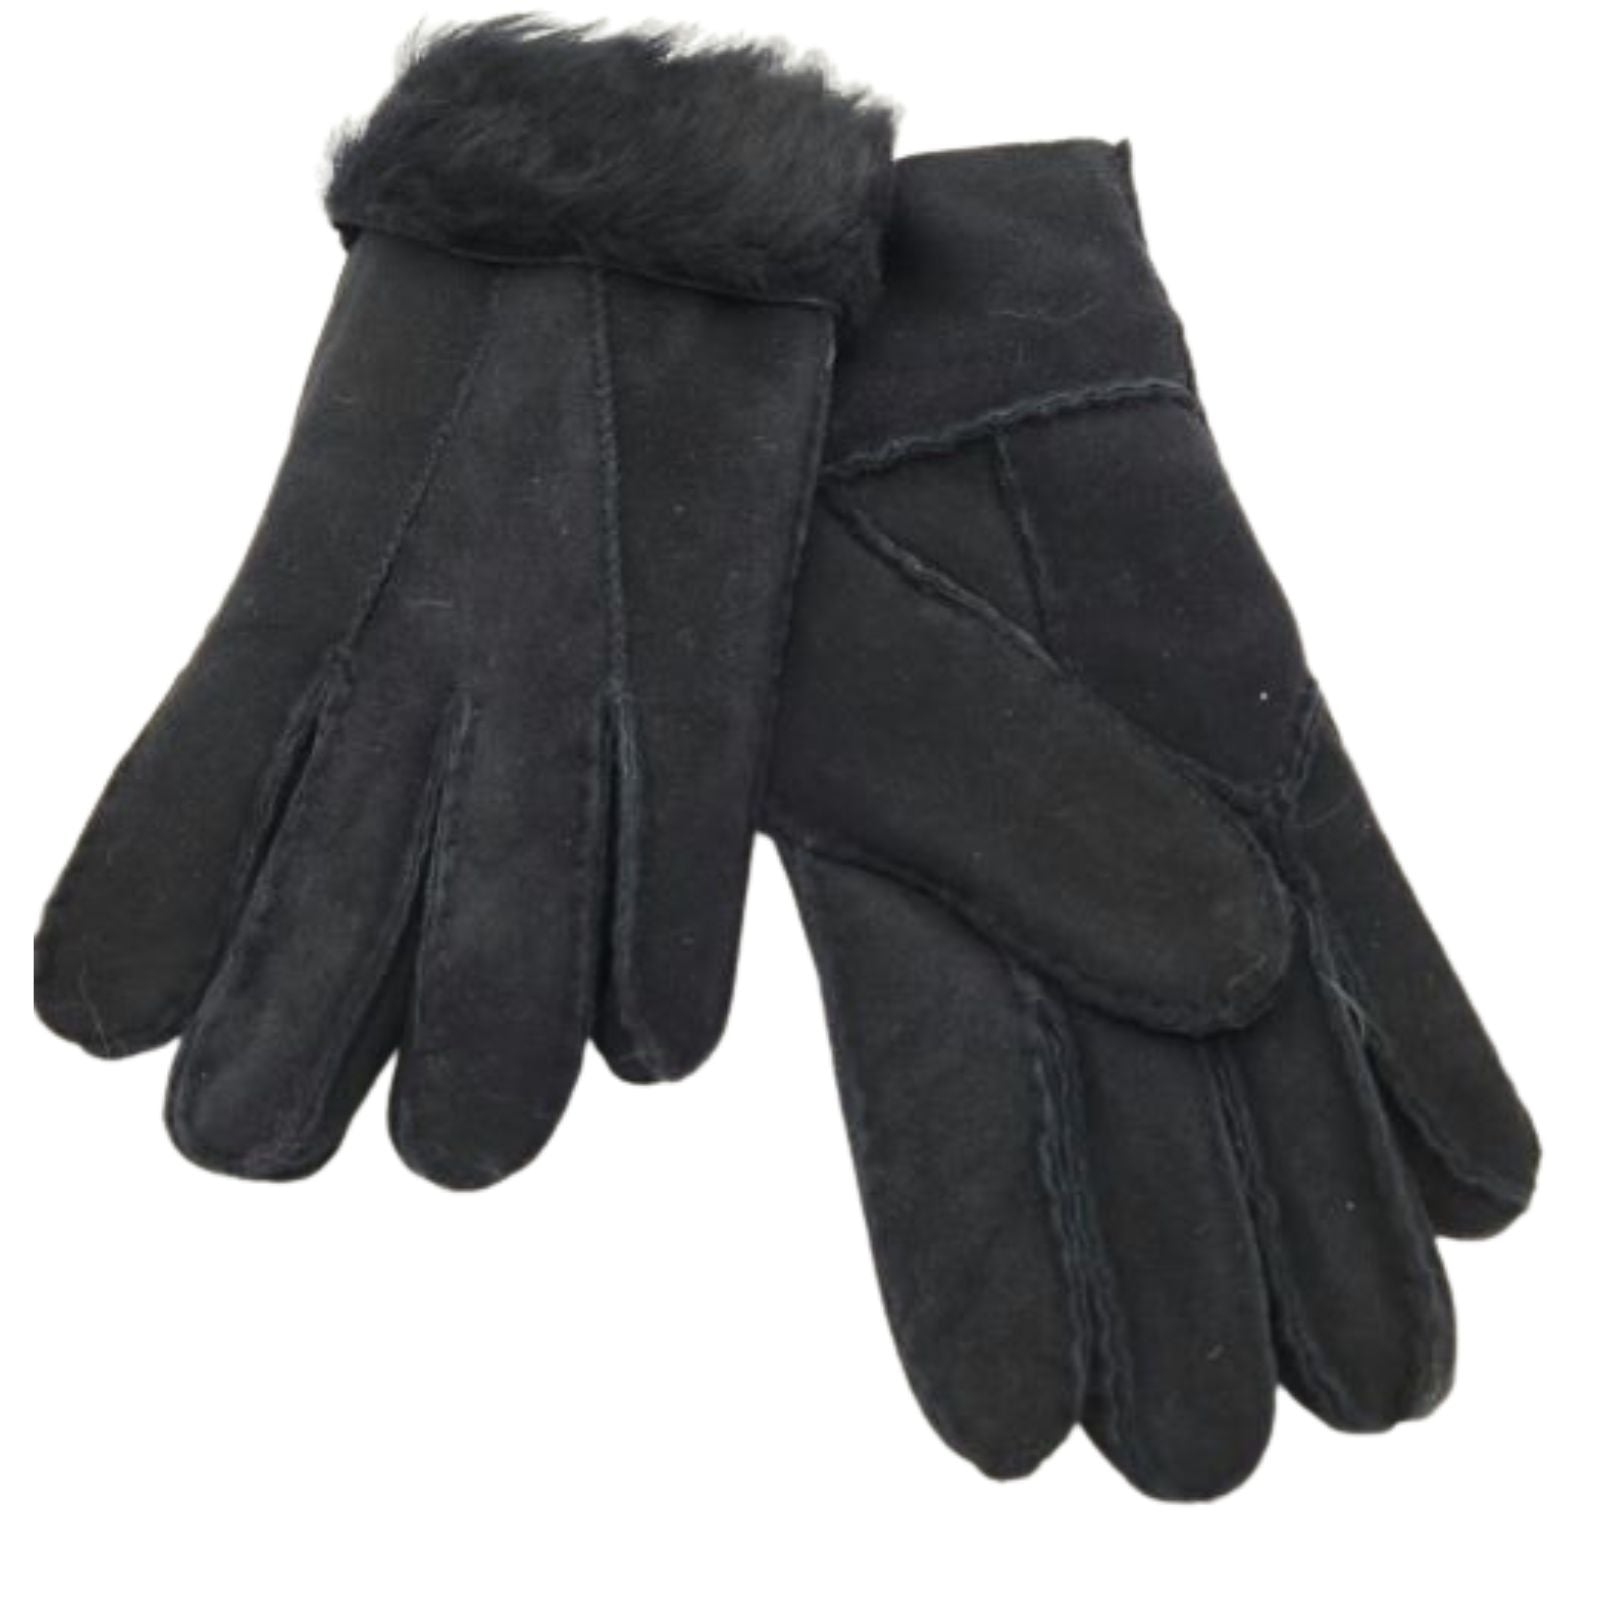 Women's Sheepskin Gloves Our "Dogwalker" In Black